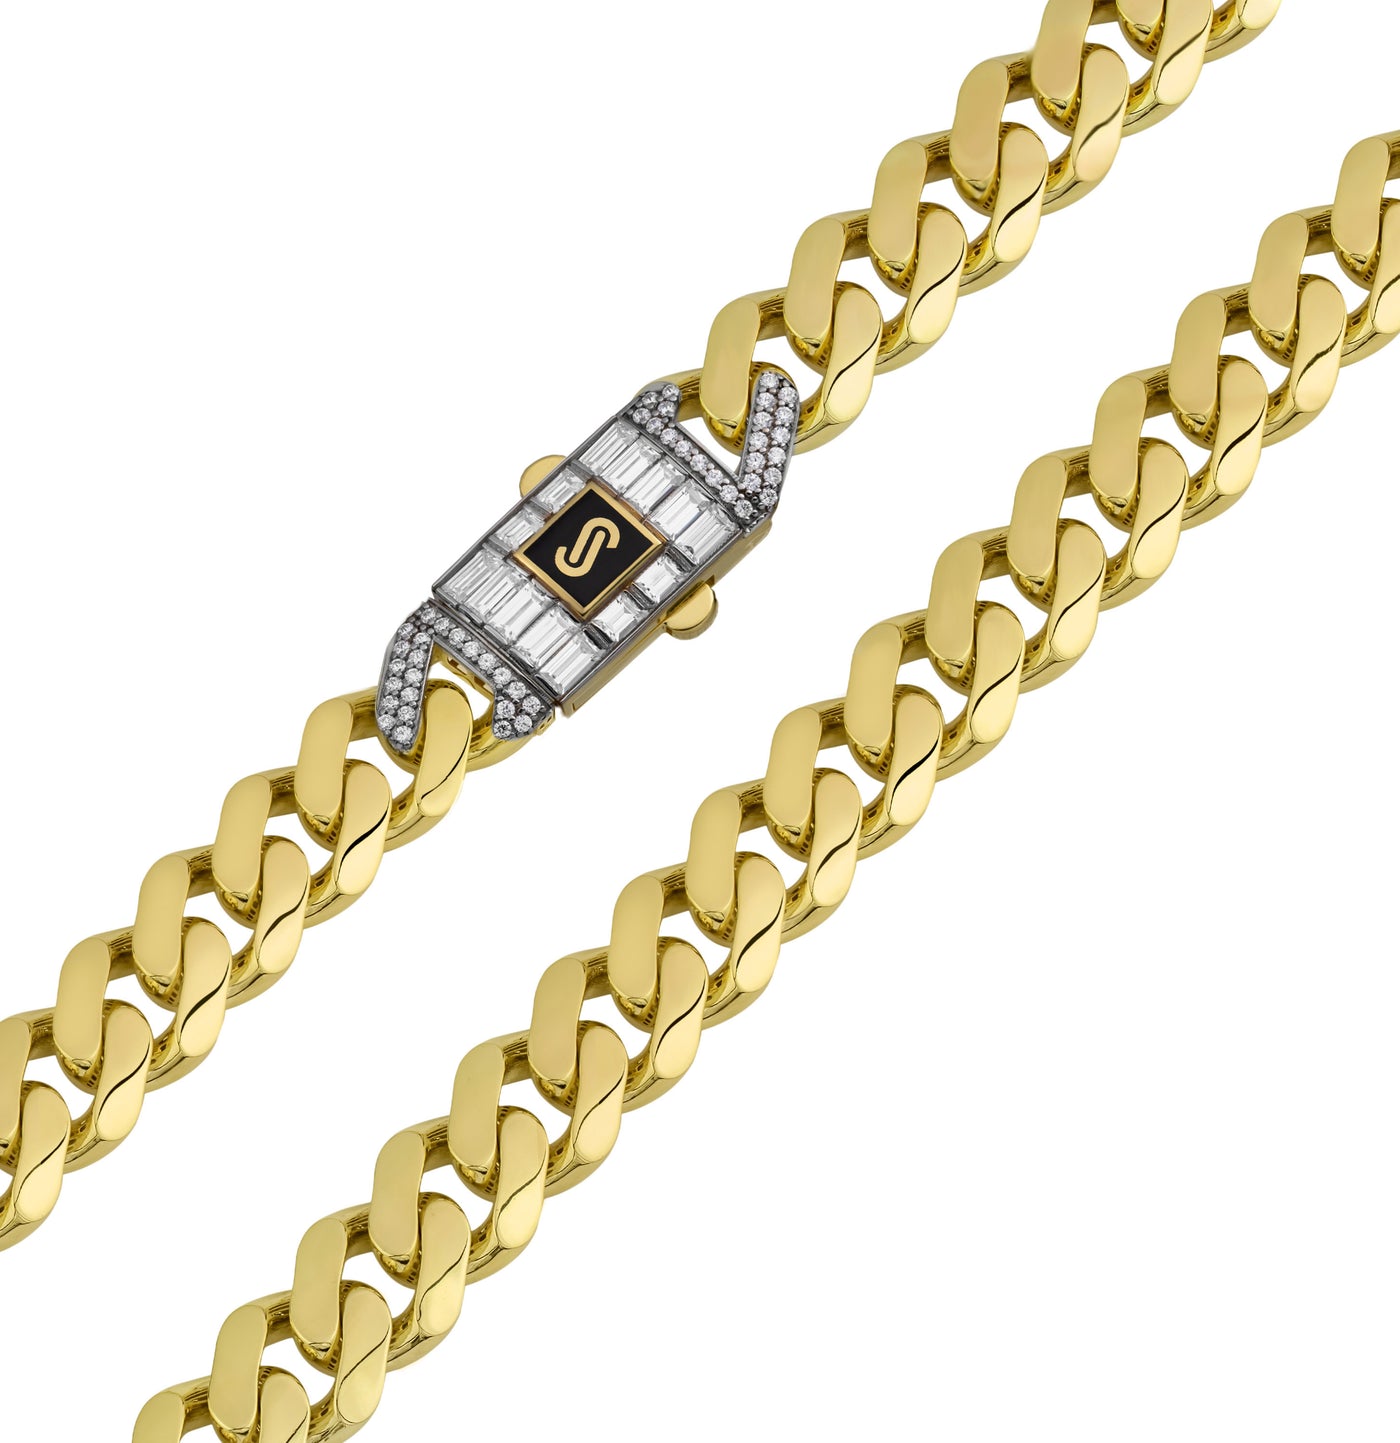 Monaco Chain Miami Cuban Link Chain Baguette CZ Lock Necklace 10K Yellow Gold - Hollow